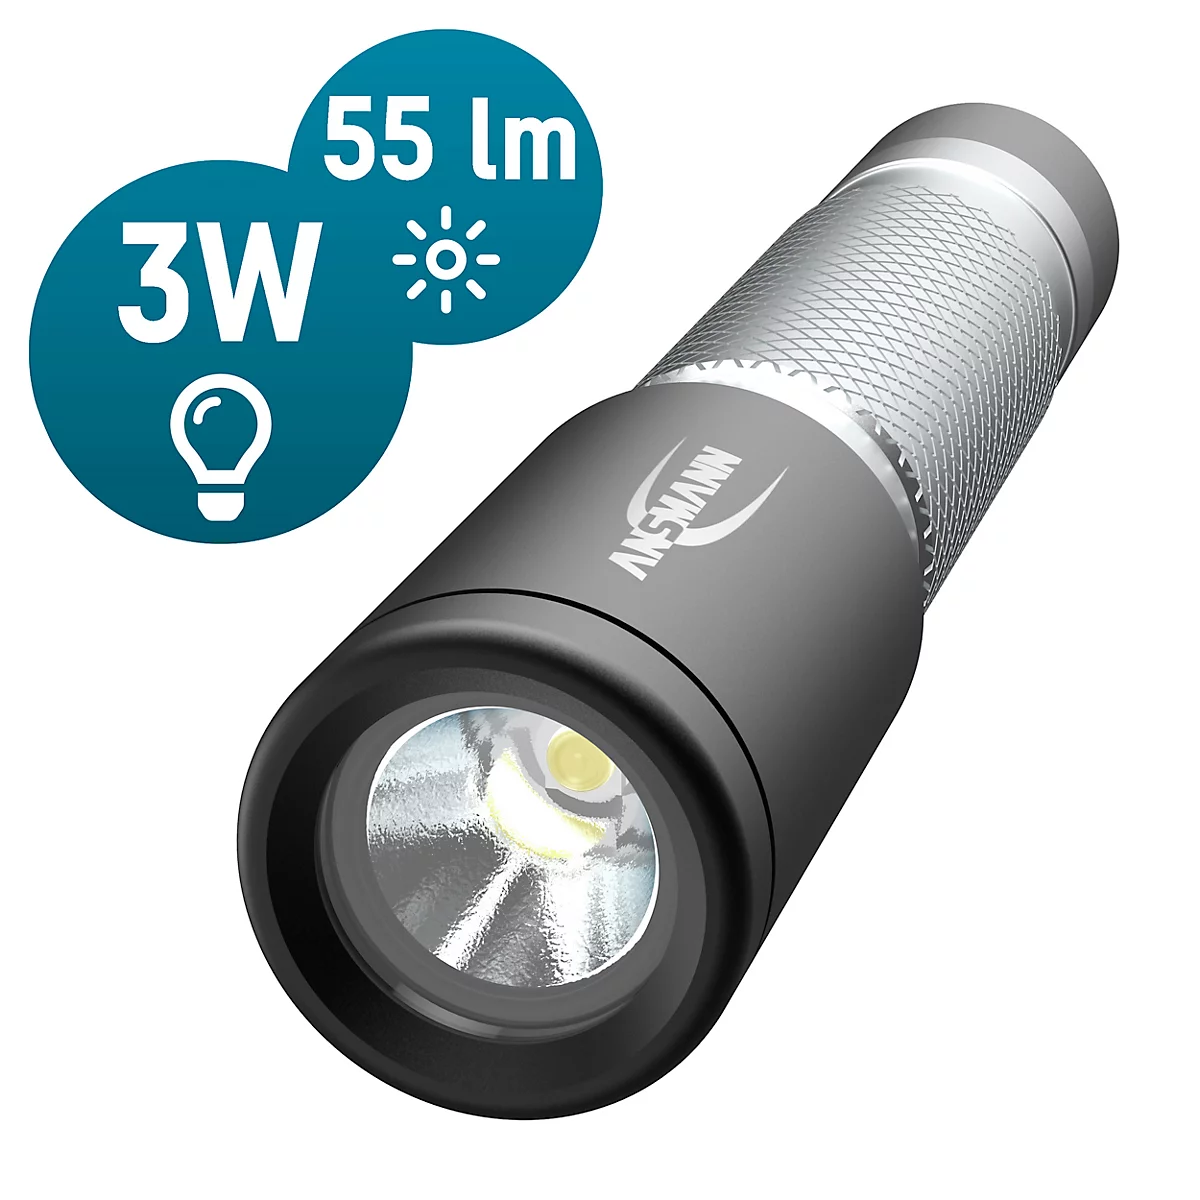 LED Taschenlampe Ansmann Daily Use 50B, inkl. 1× Micro AAA, 55 lm, 16,5 h, bis zu 36 m, L 85 x Ø 18 mm, Aluminiumgehäuse, schwarz-grau